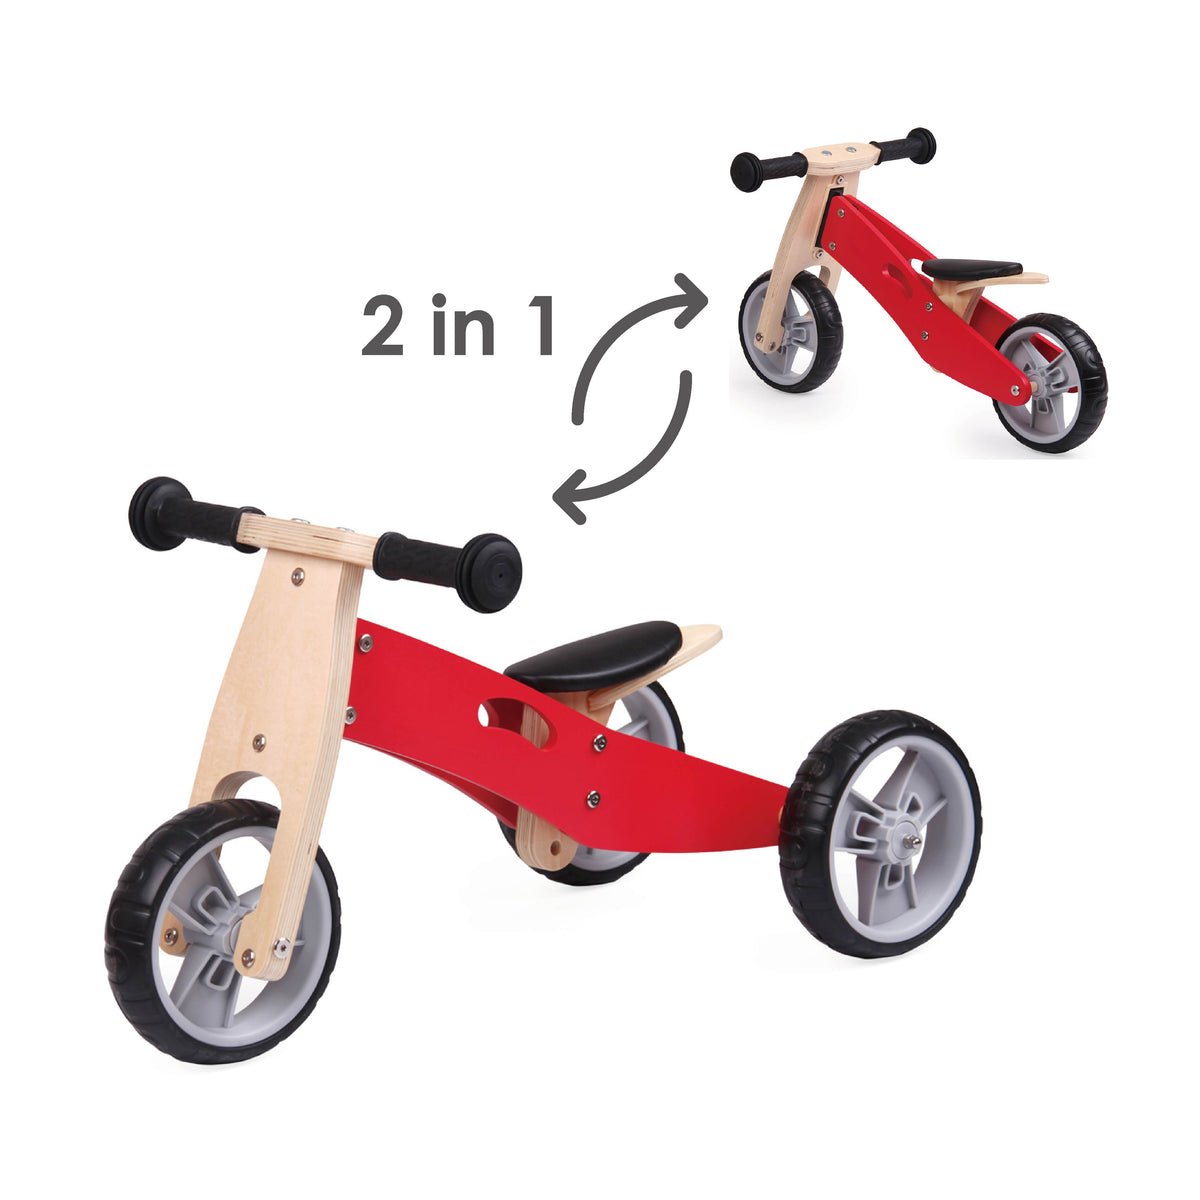 Udeas Udeas Varoom-mini 2in1 scooter-Red Wooden Toy